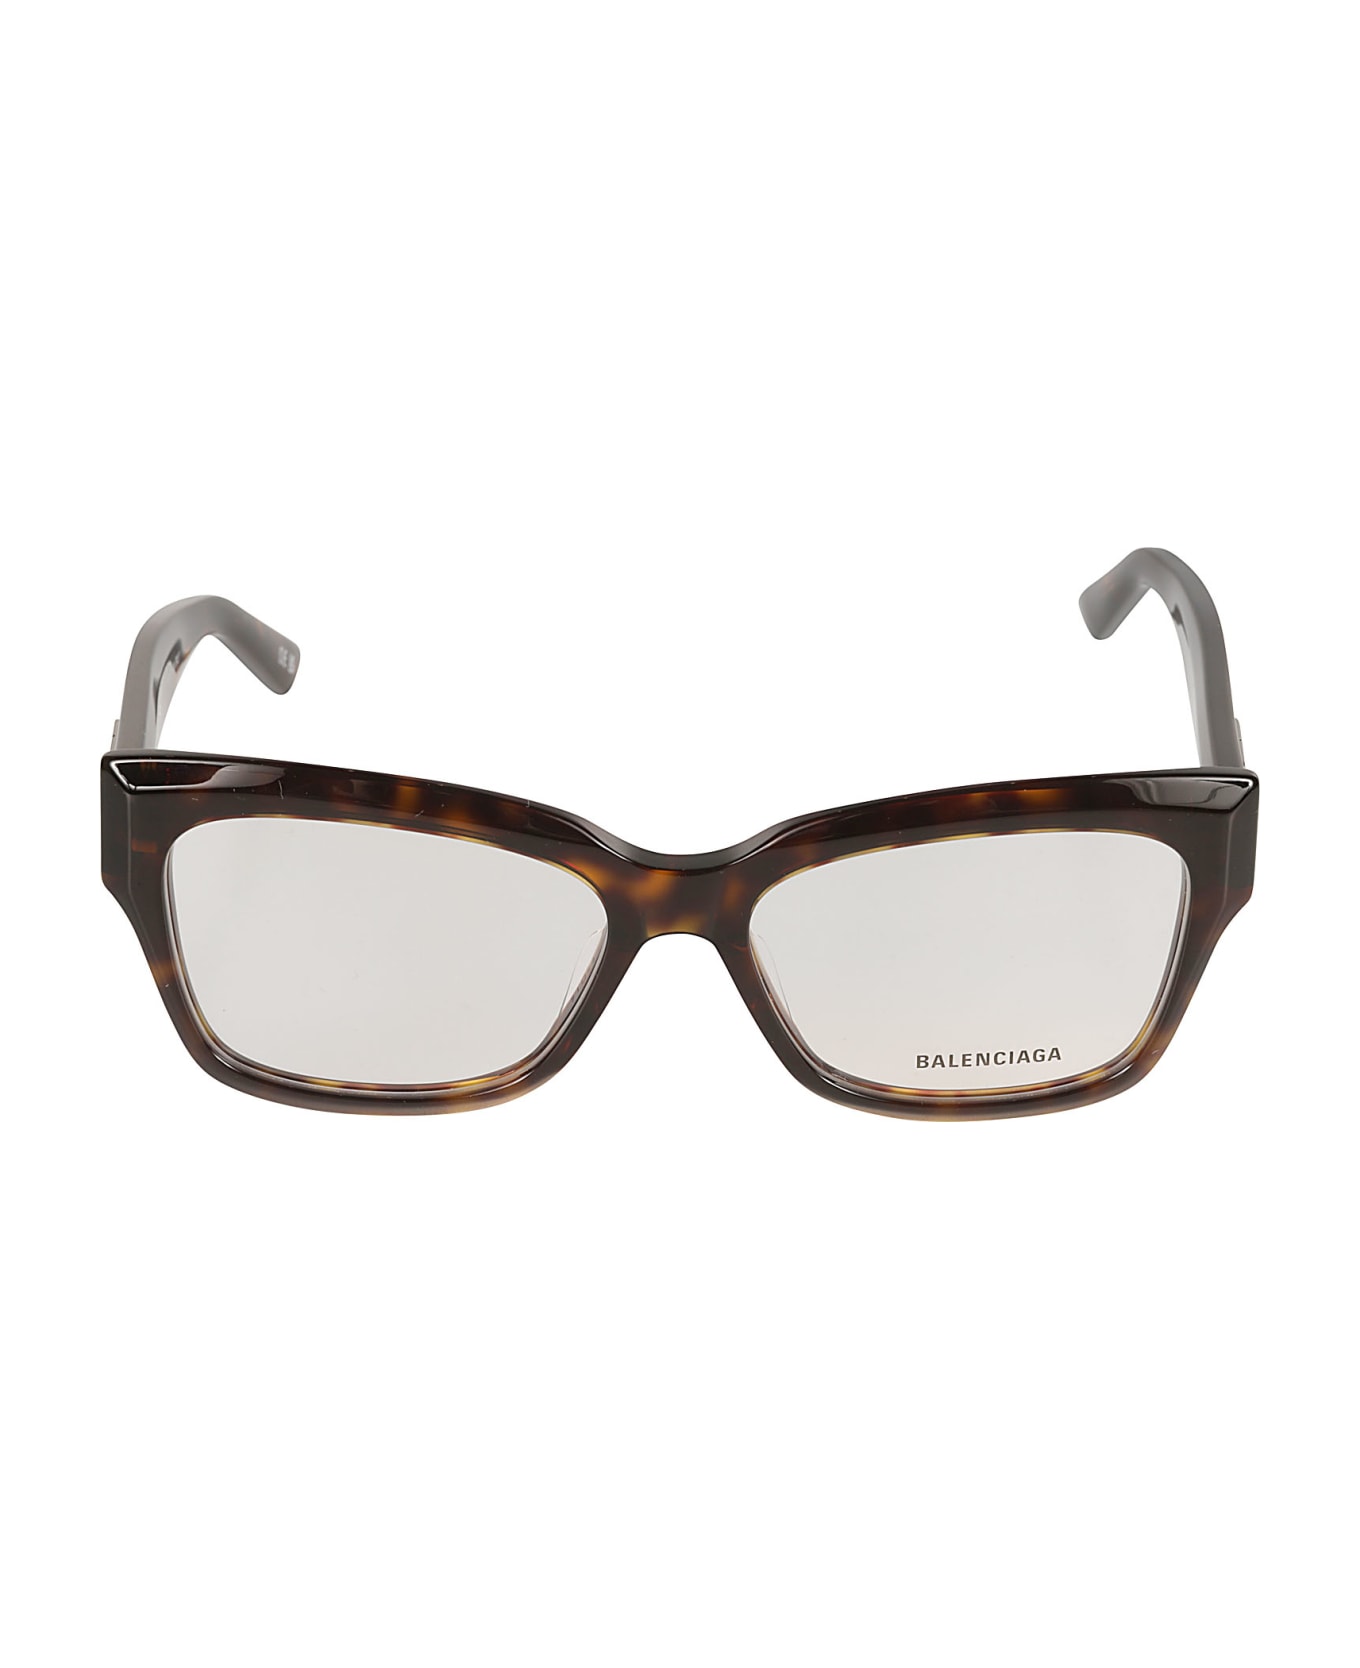 Balenciaga Eyewear Flame Effect Square Glasses - Havana/Transparent